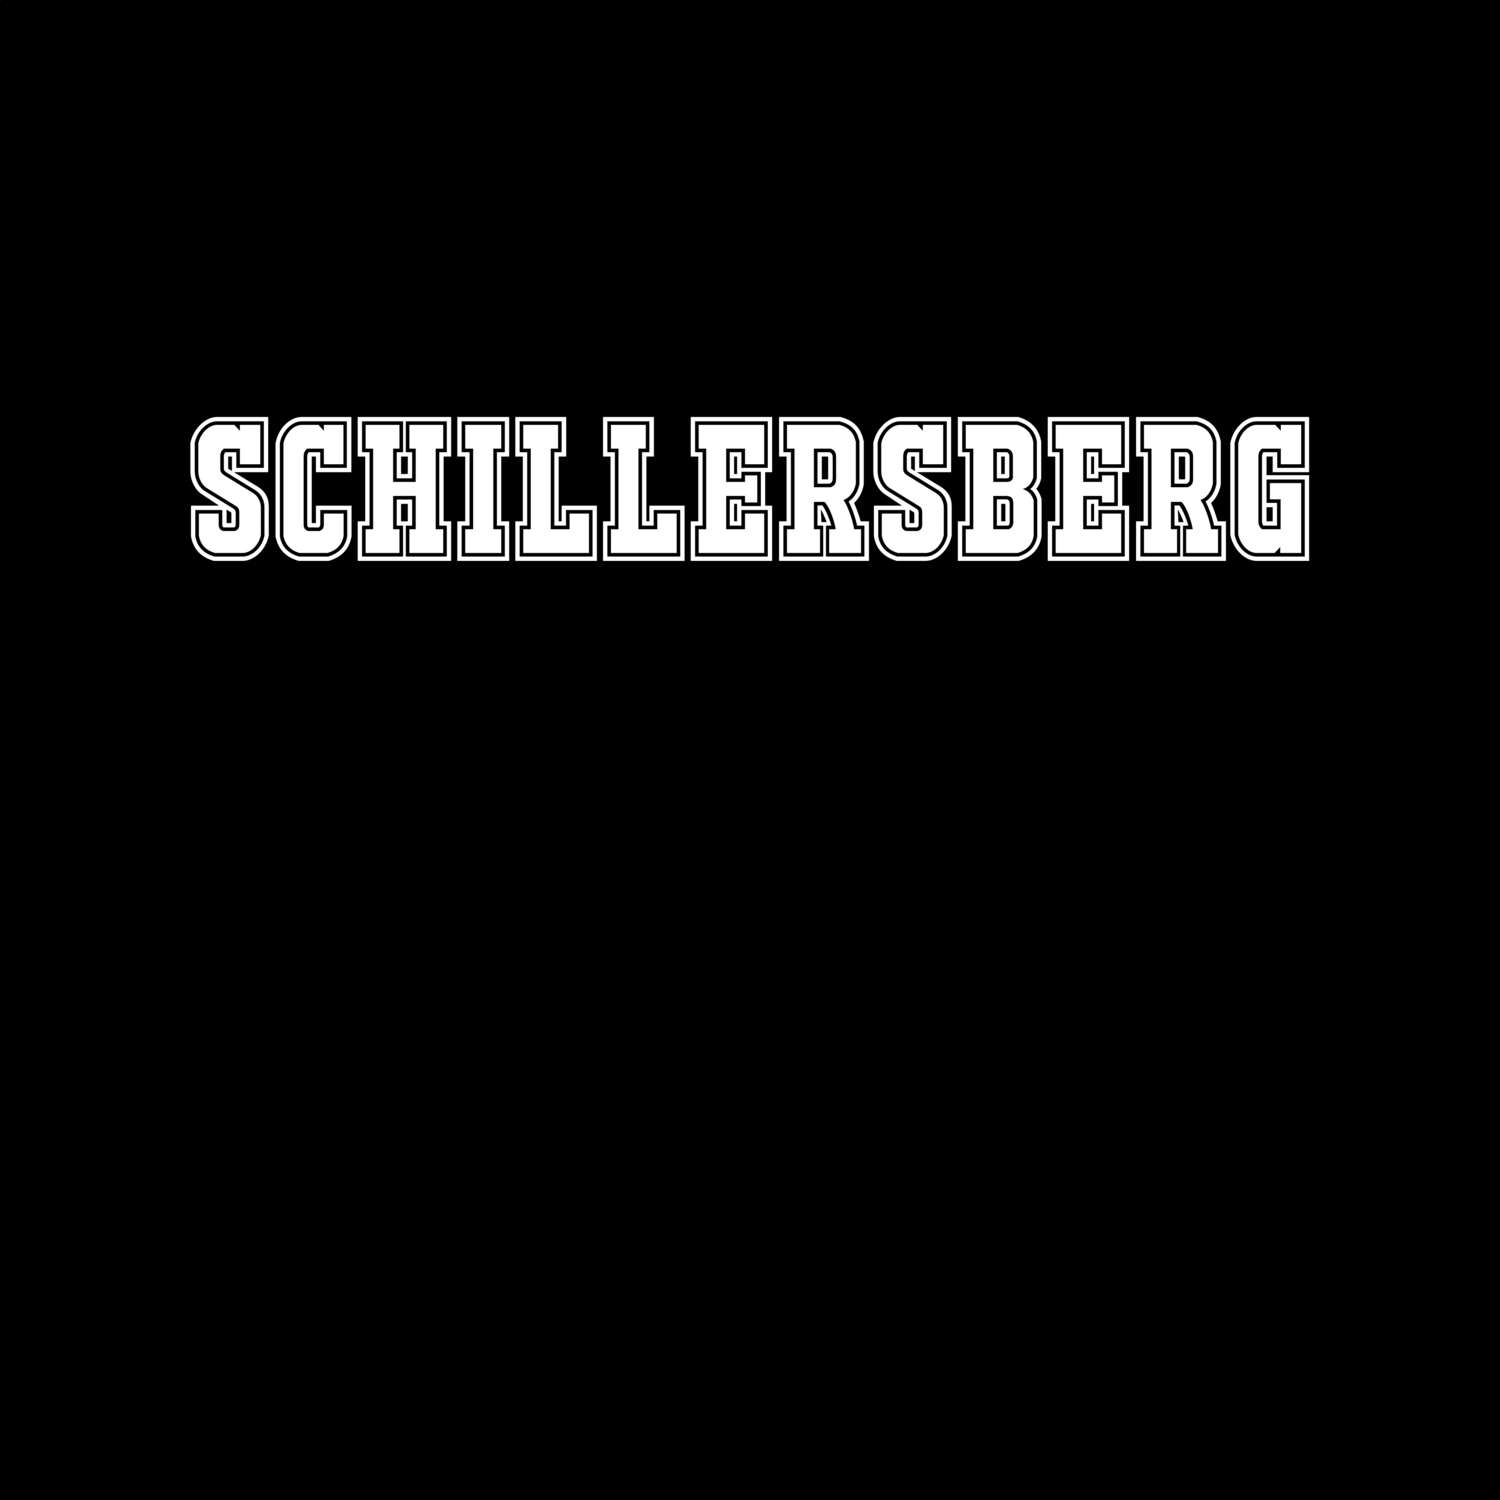 Schillersberg T-Shirt »Classic«